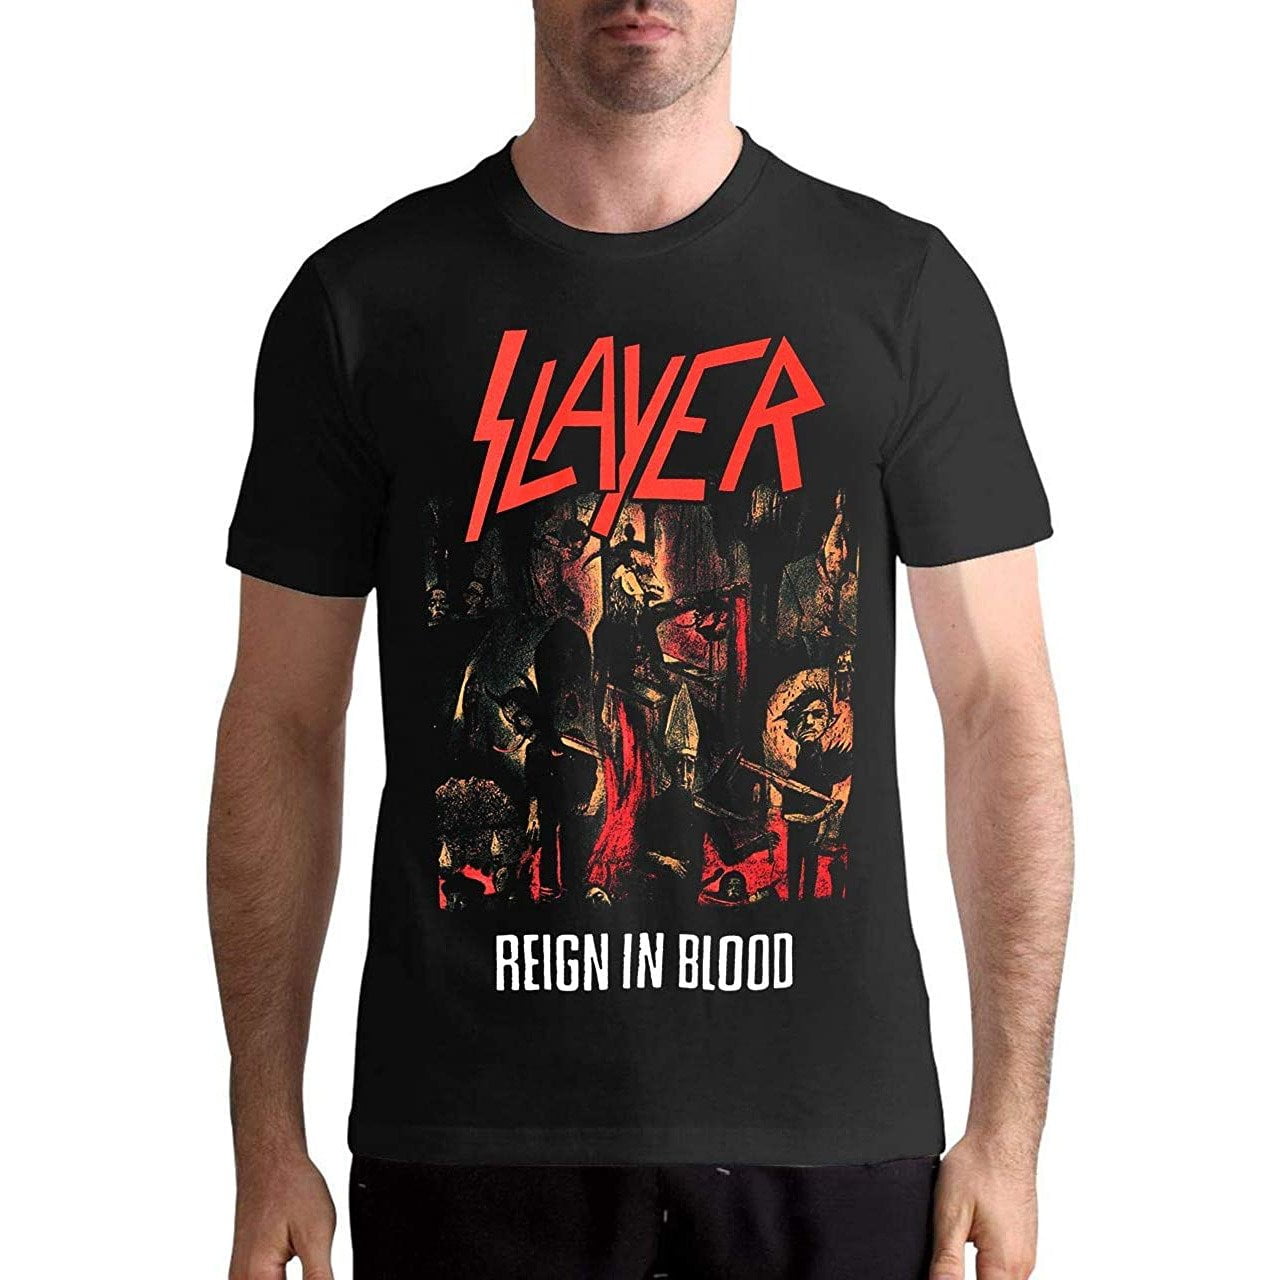 Training slayer последняя версия. Slayer приколы. Slayer Reign in Blood t Shirt. Slayer мемы. Футболка Slayer Reign in Blood.